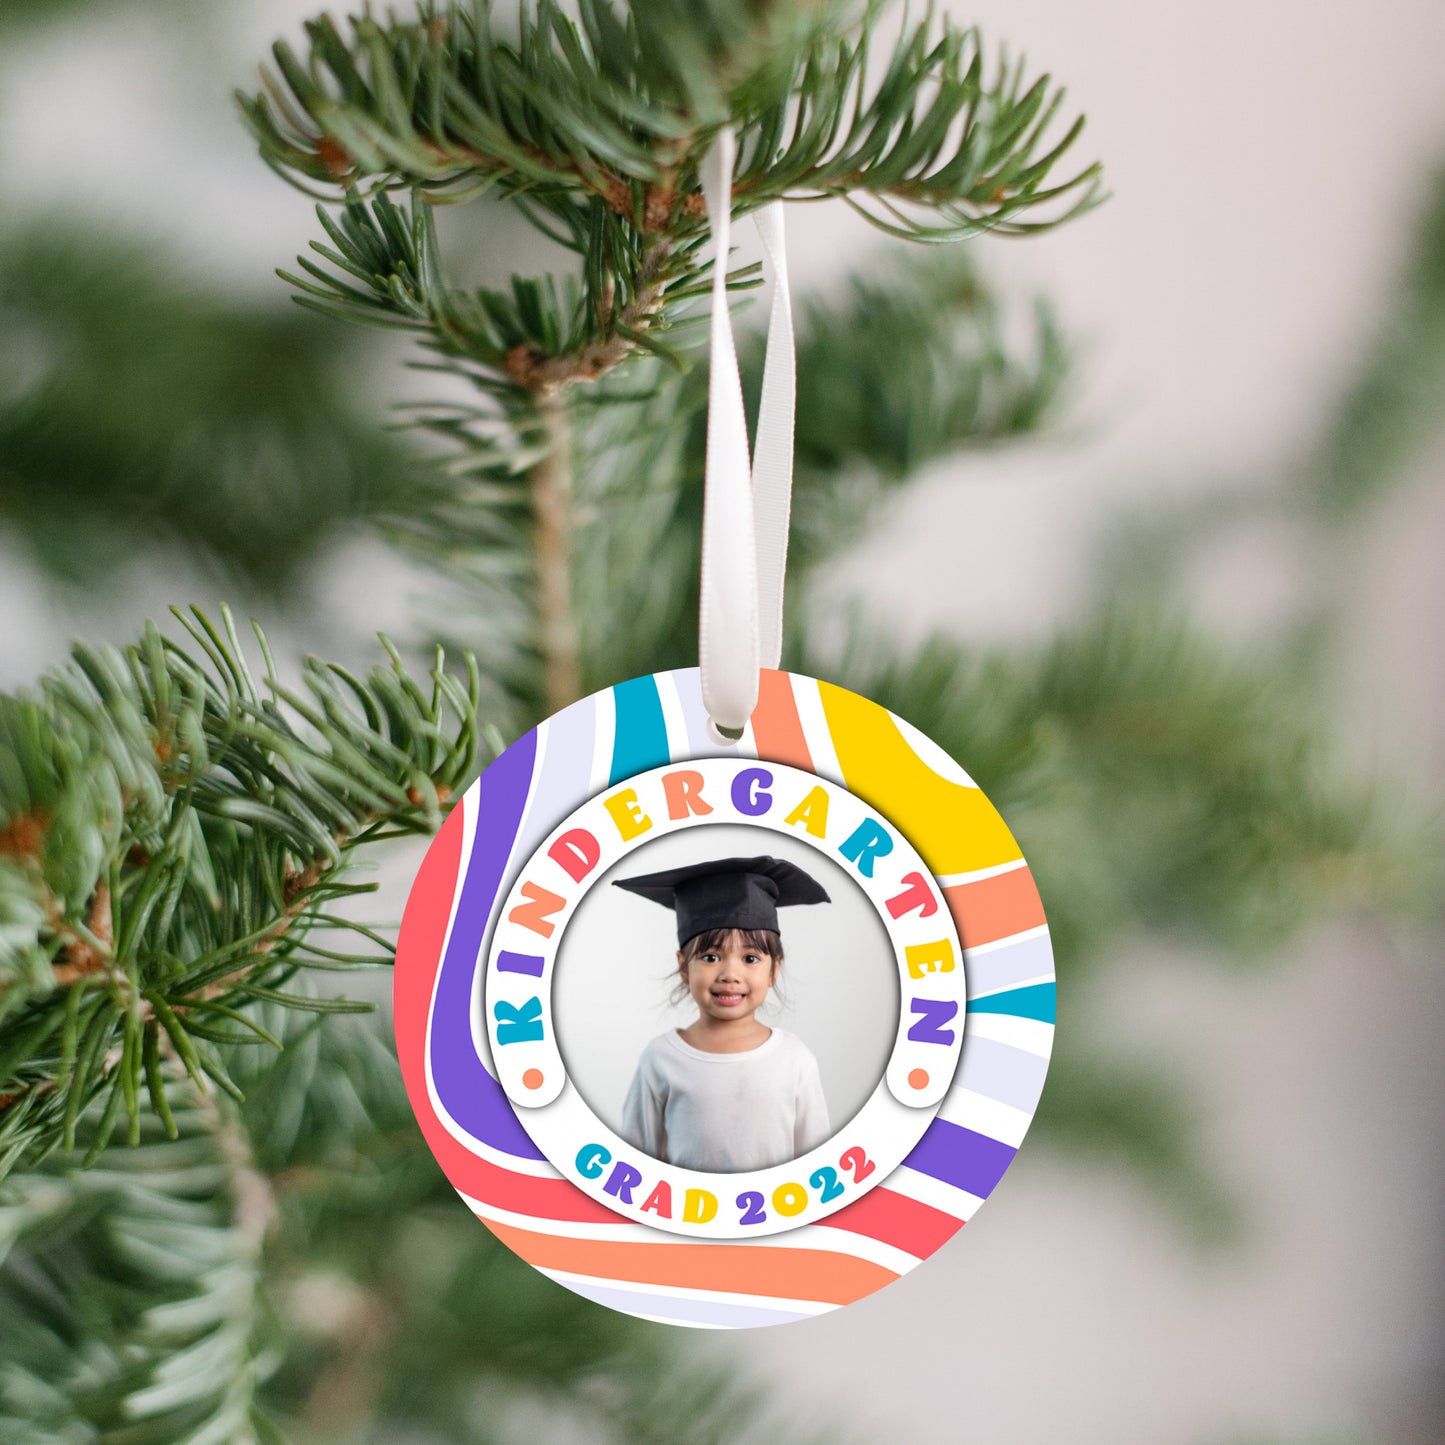 Kindergarten Grad 2022 Ornament